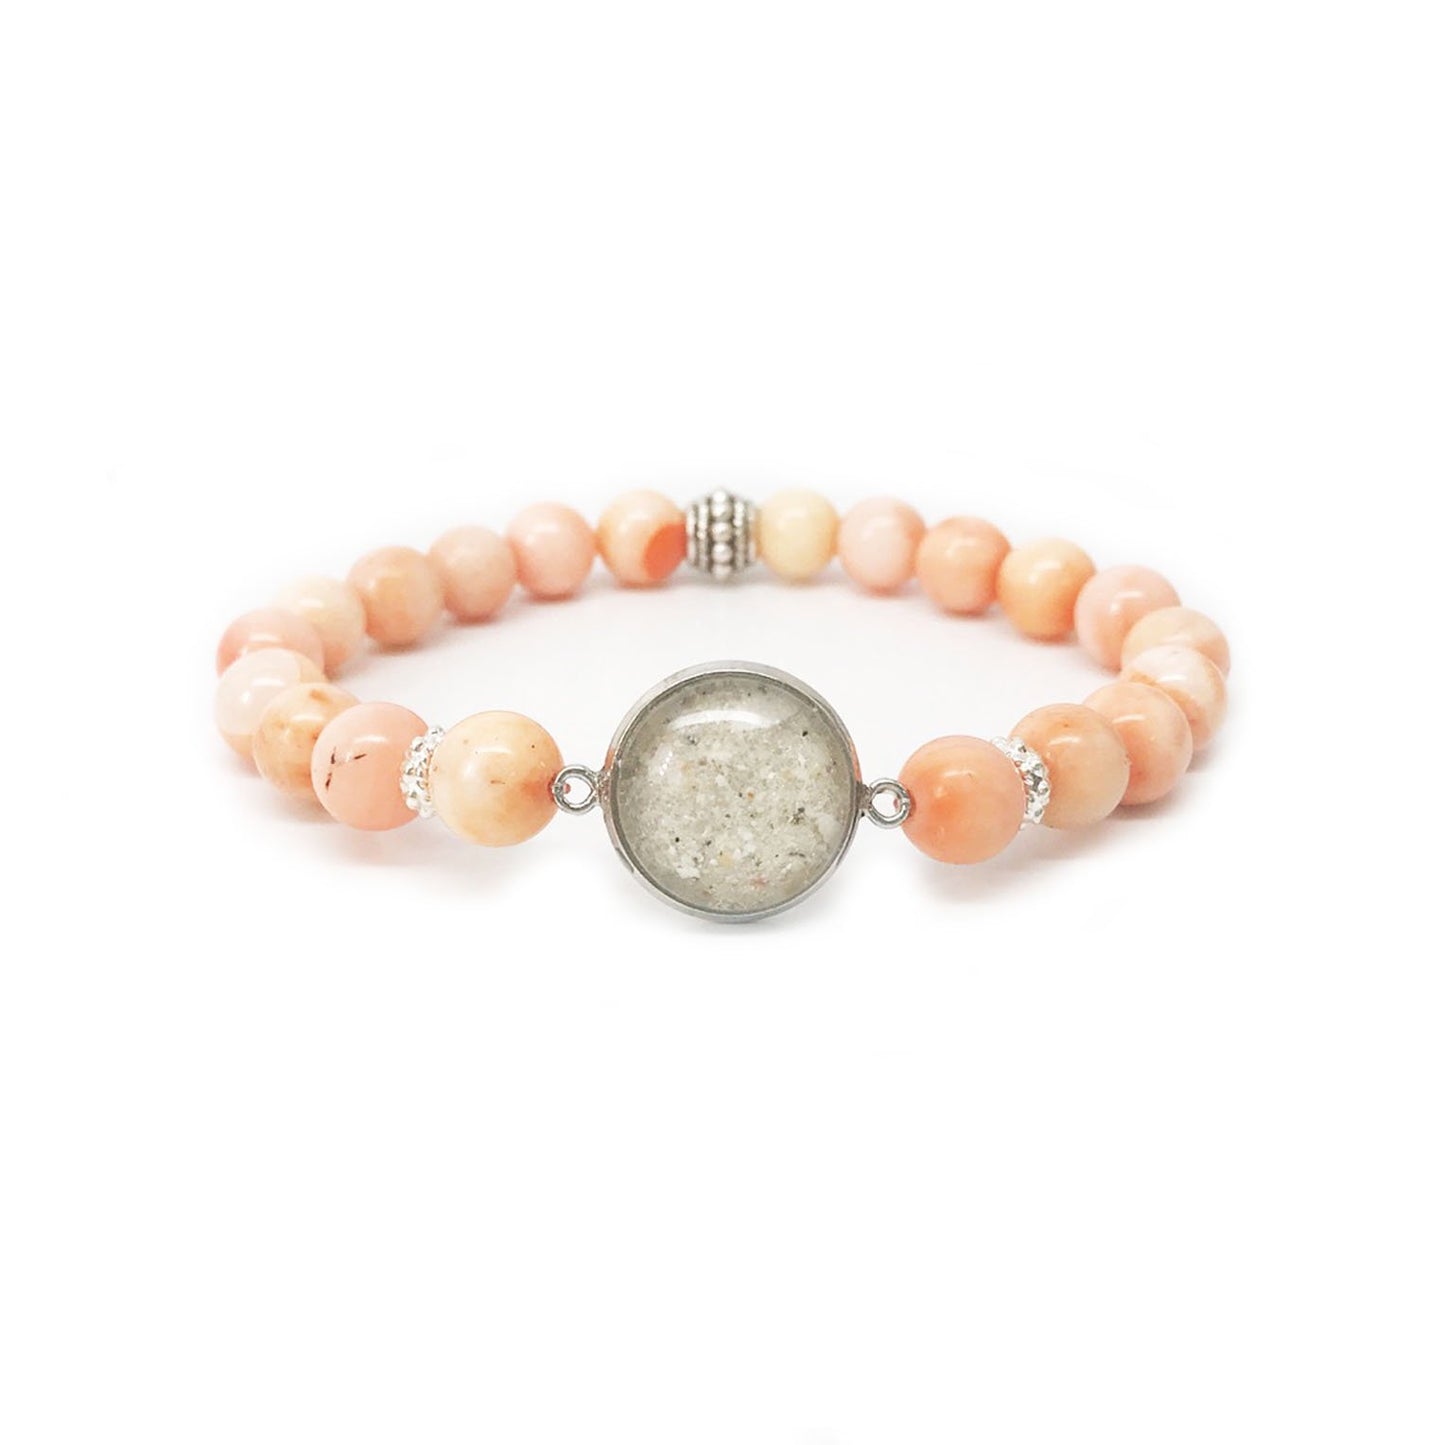 Opal Stone Bracelet-Healing Meditation Natural Galaxy Sea Sediment Bracelet